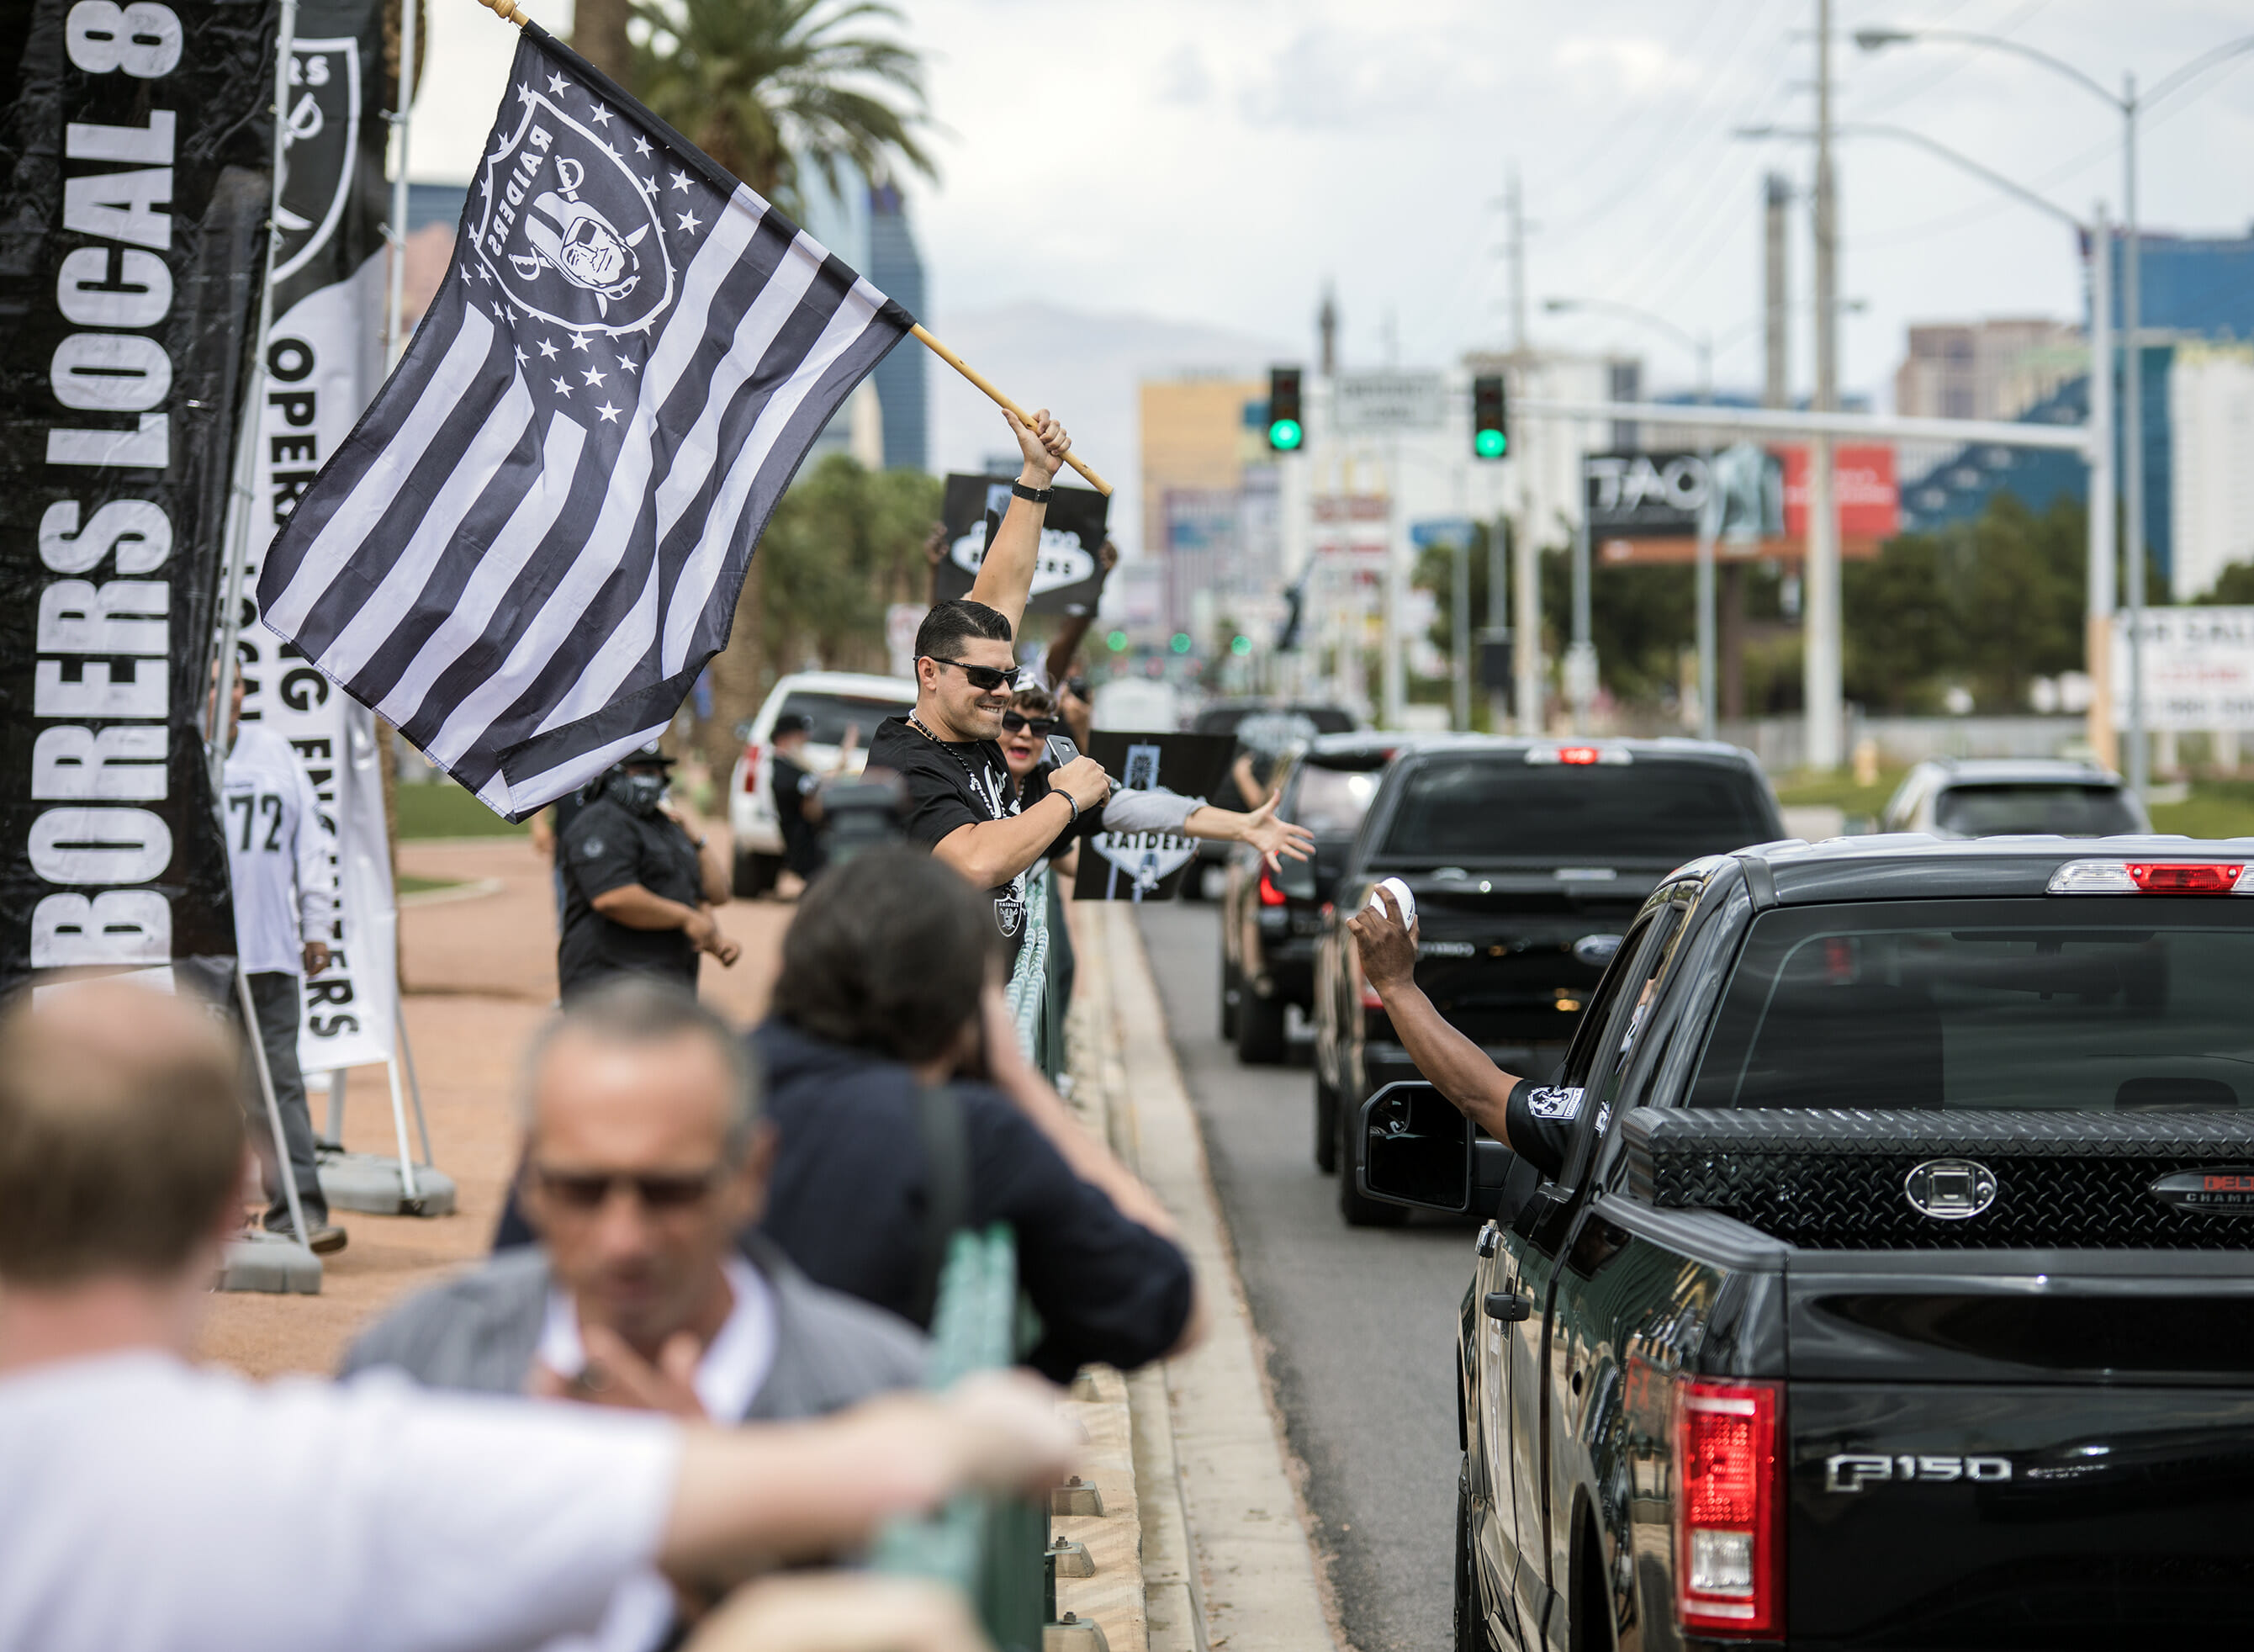 A man waiving a Raiders flag on a sidewalk